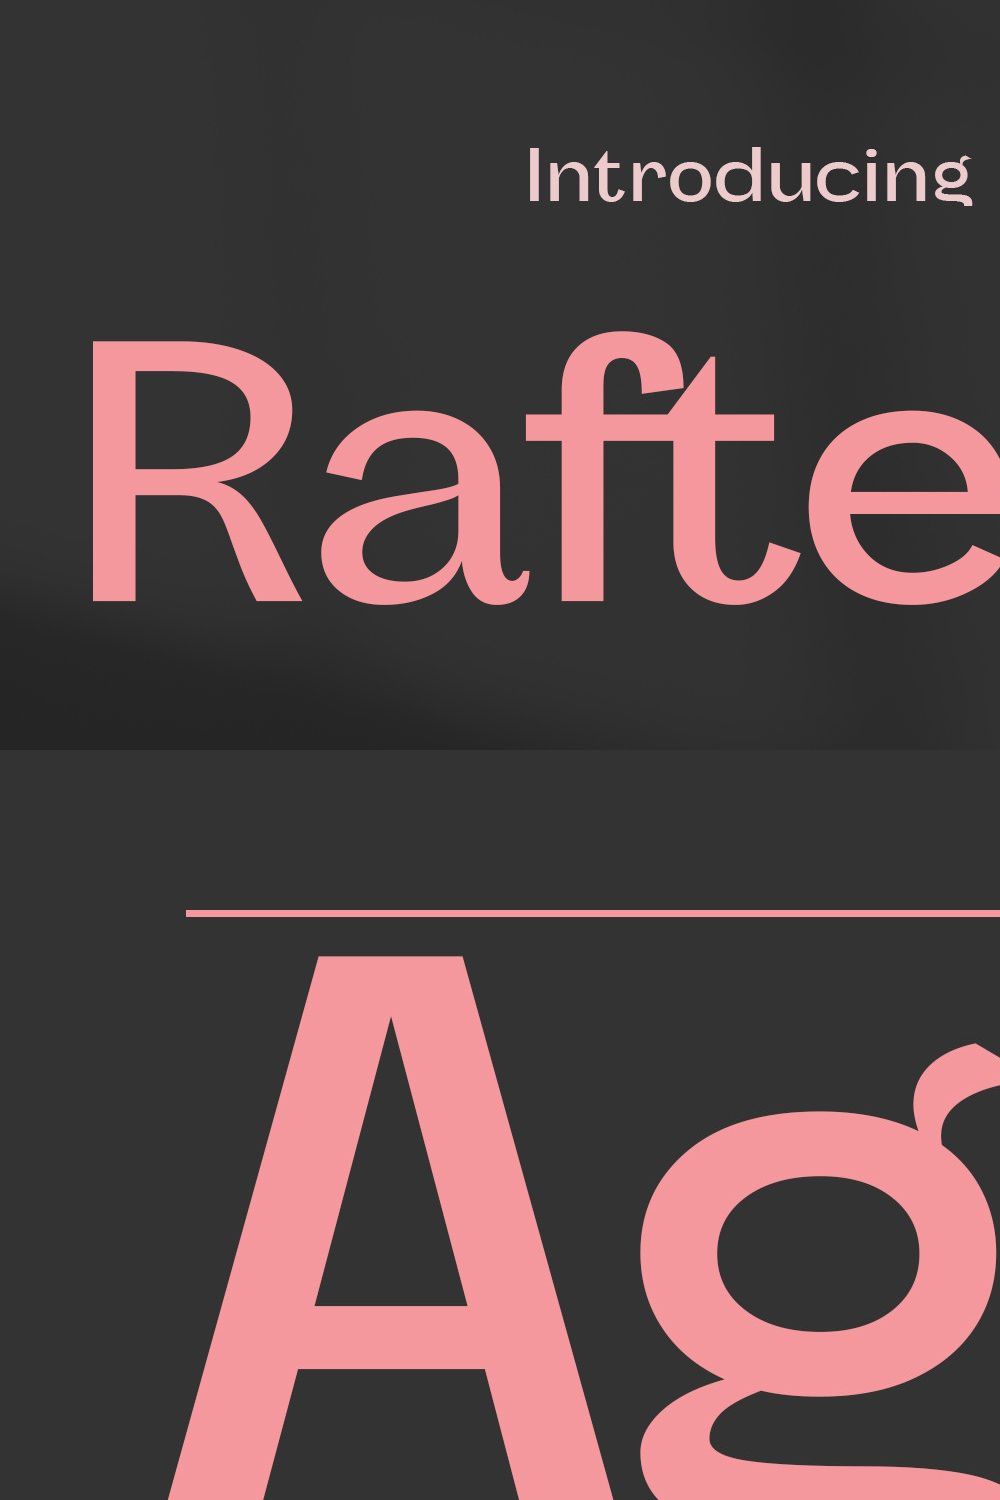 Raftera Clean Modern Sans Serif Font pinterest preview image.